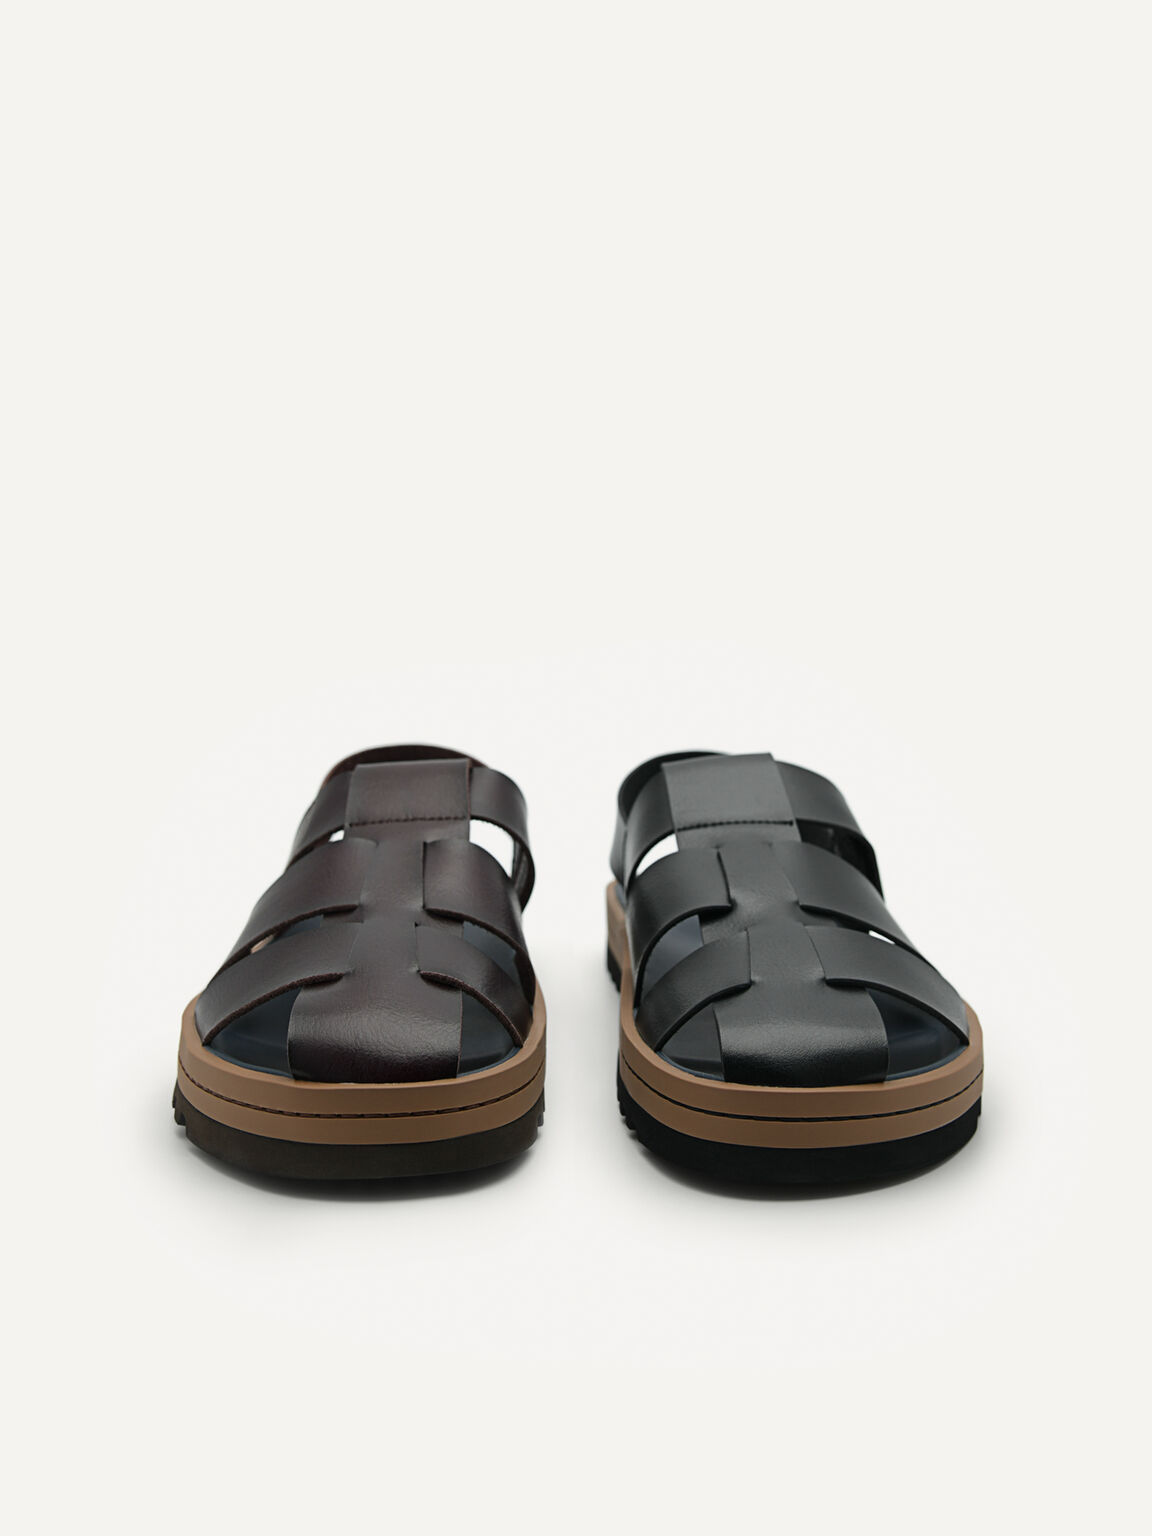 George Caged Sandals, Black